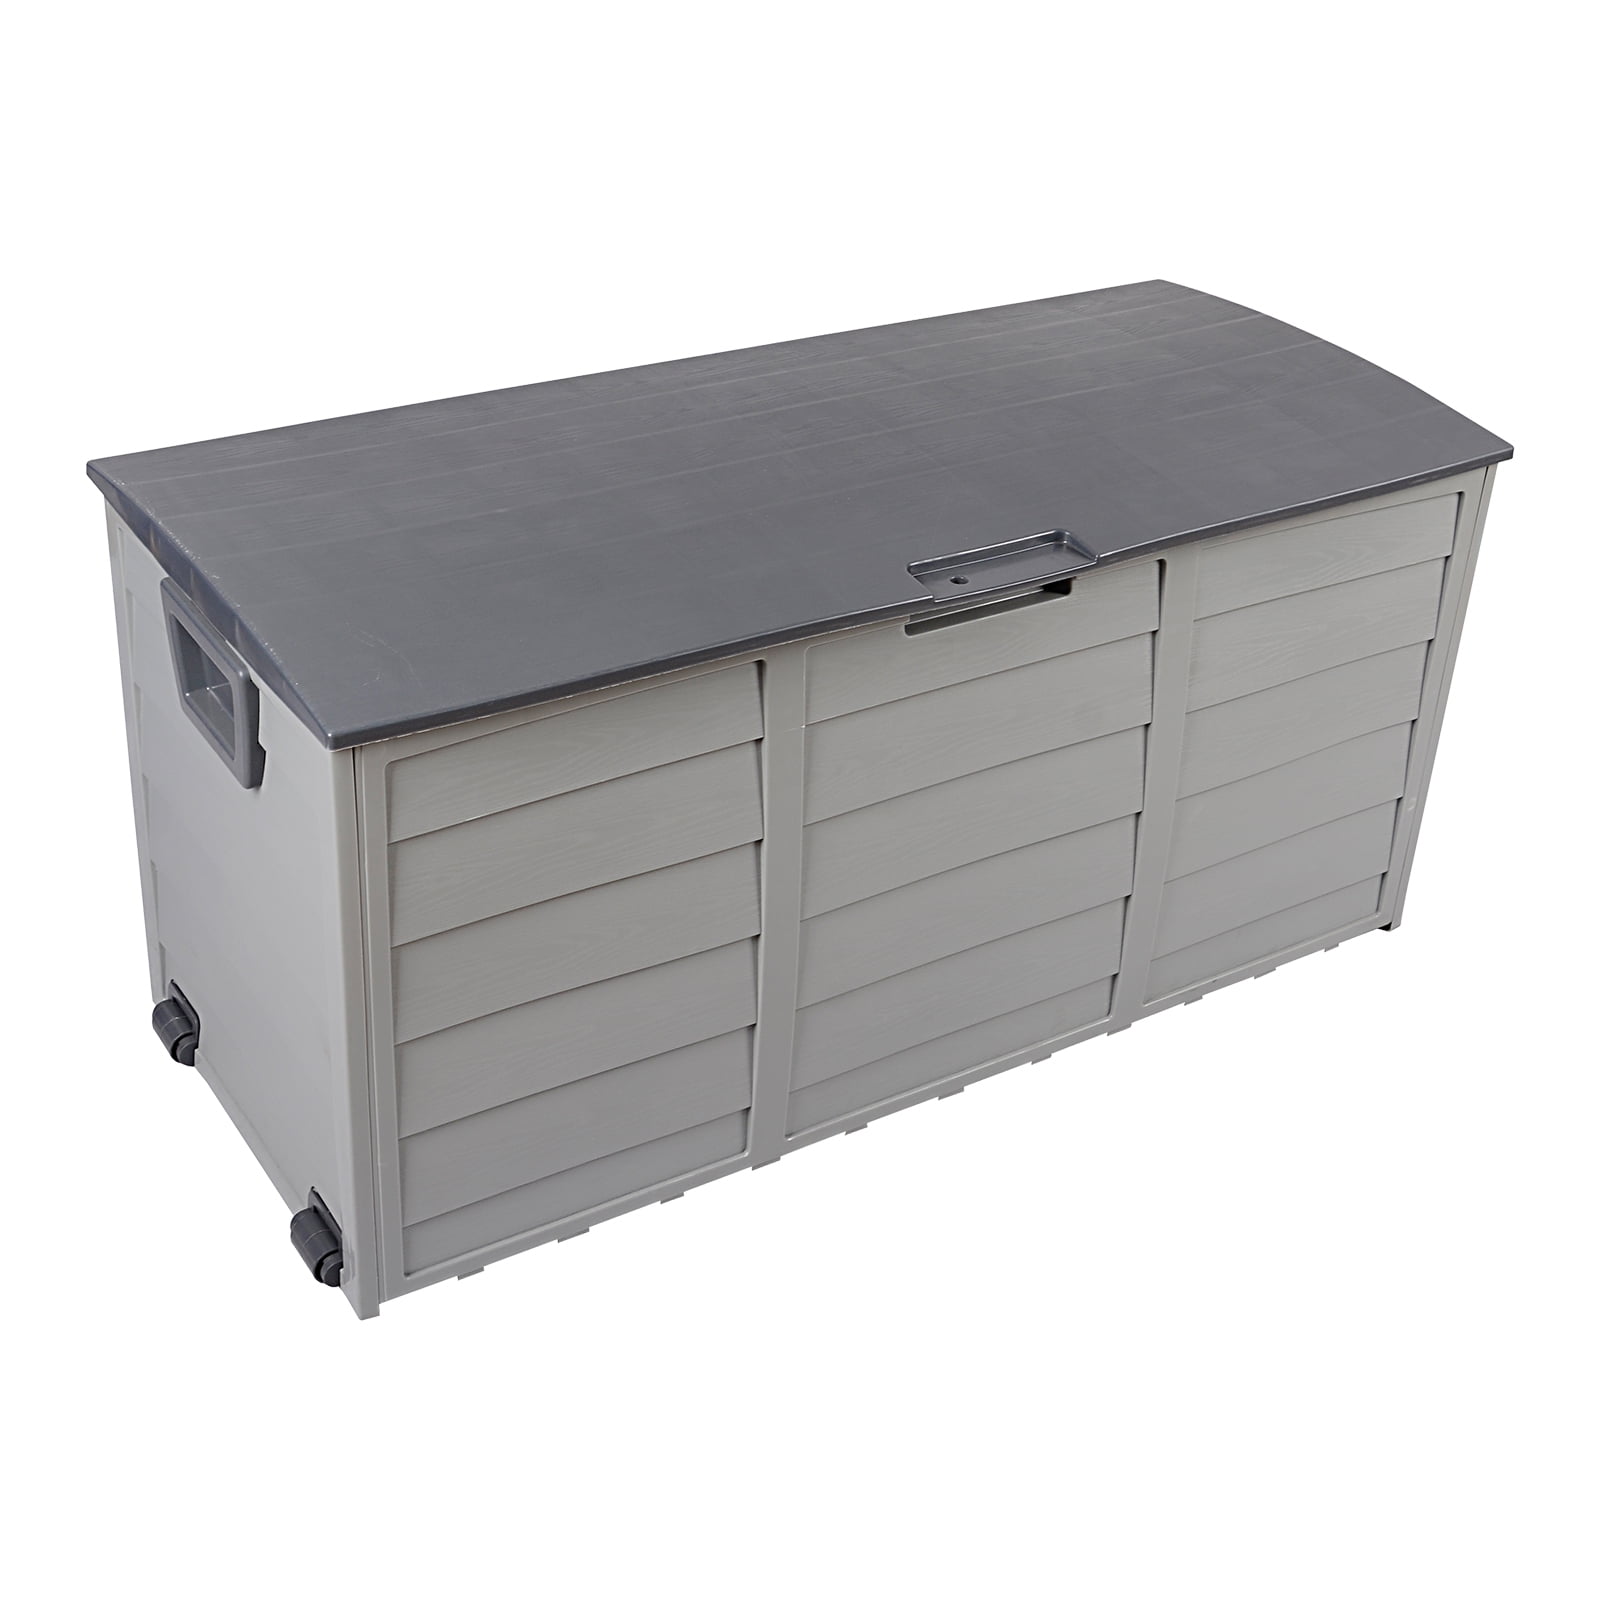 75 Gallon Resin Deck Box on Wheels, Patio Large Storage Cabinet